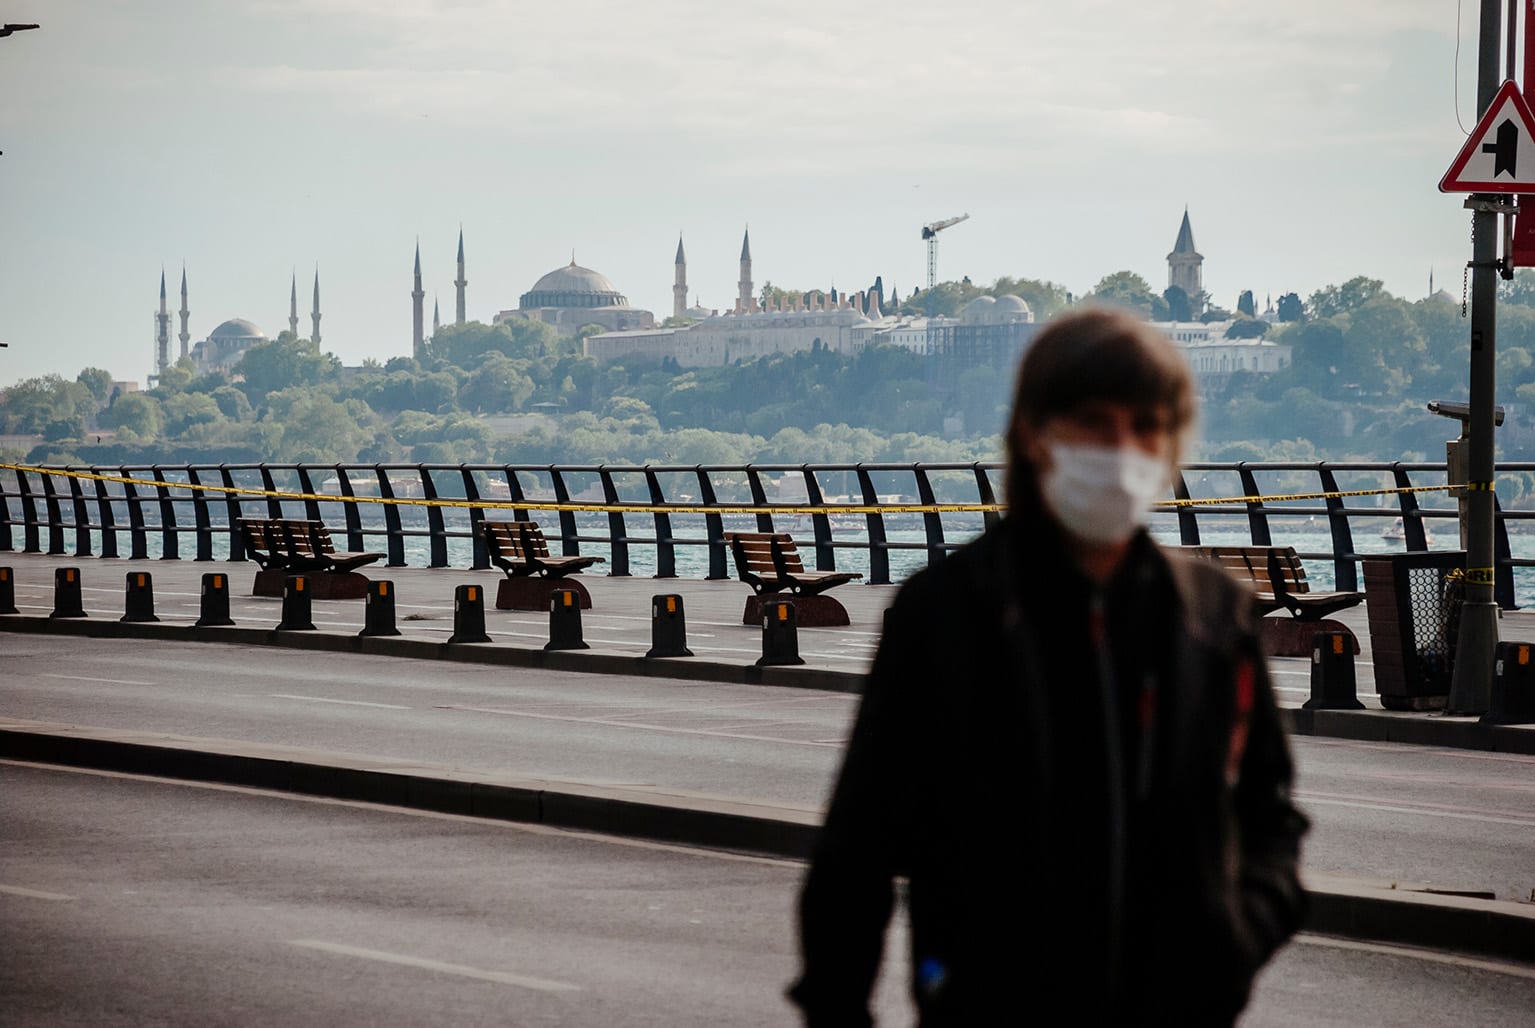 Post-lockdown normalization period starts in Turkey